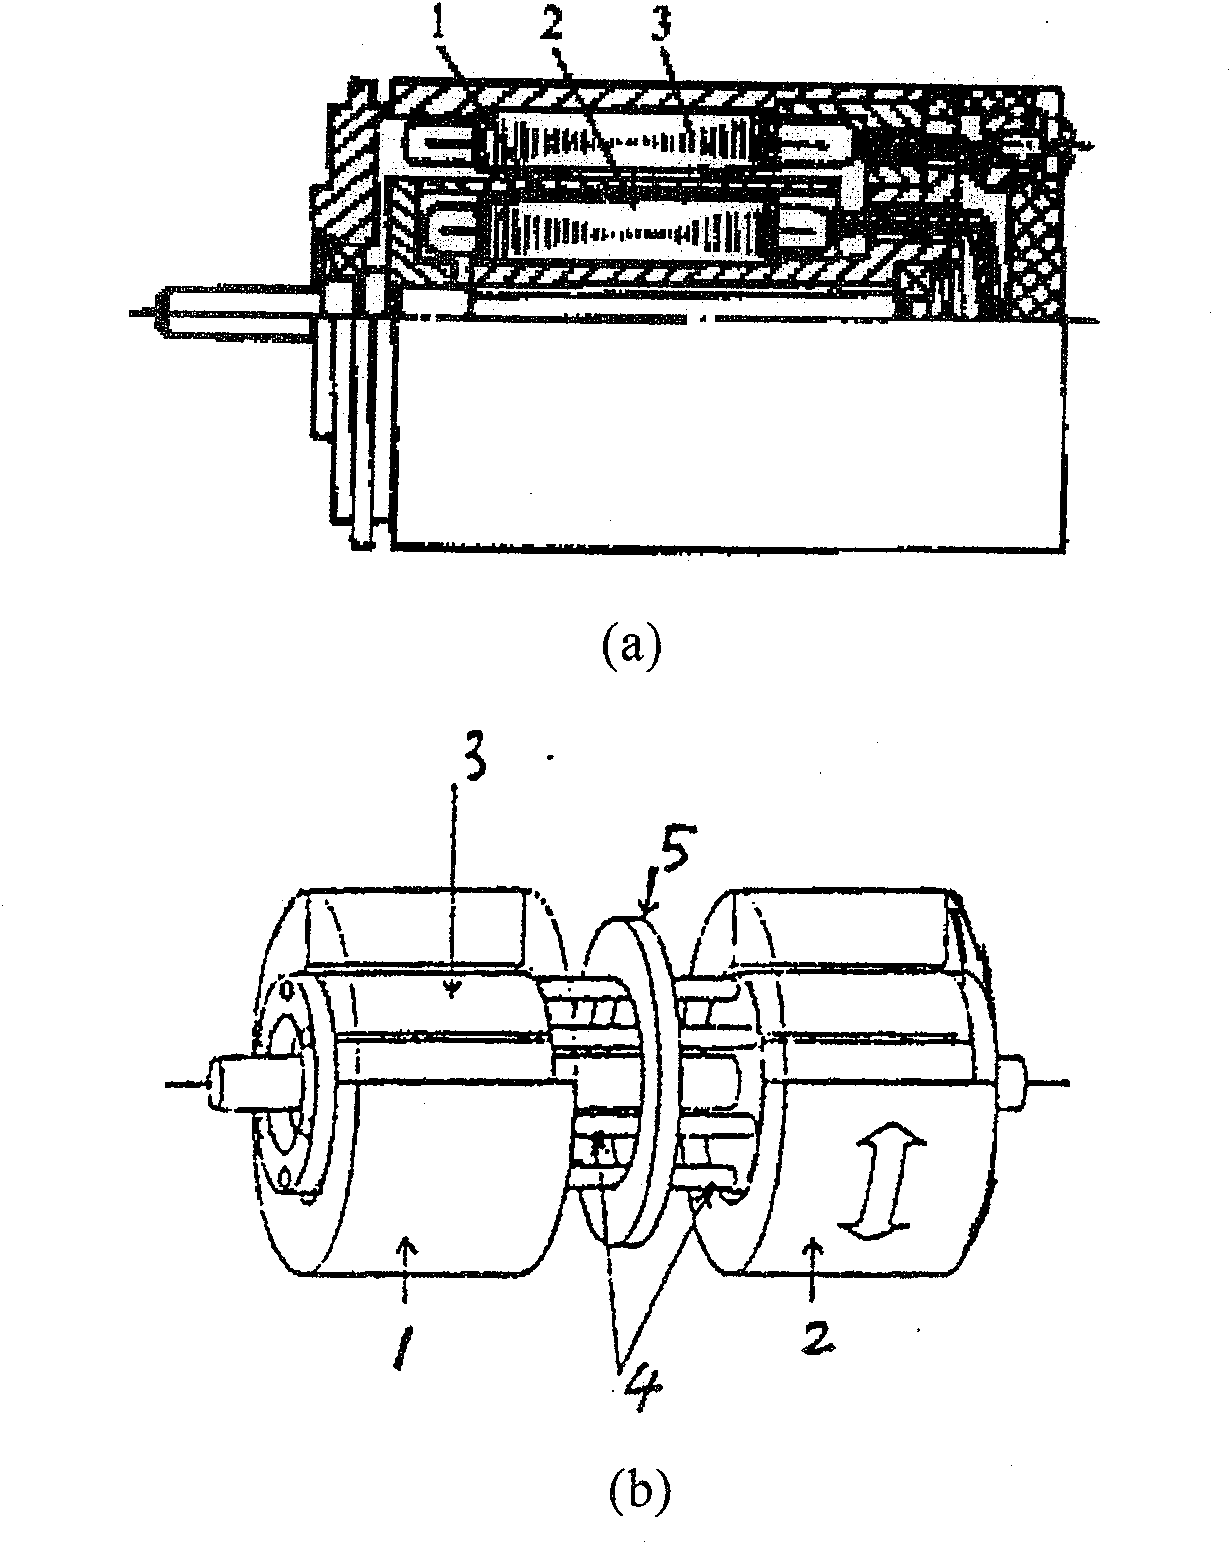 Torque motor for satellite antenna pointing mechanism